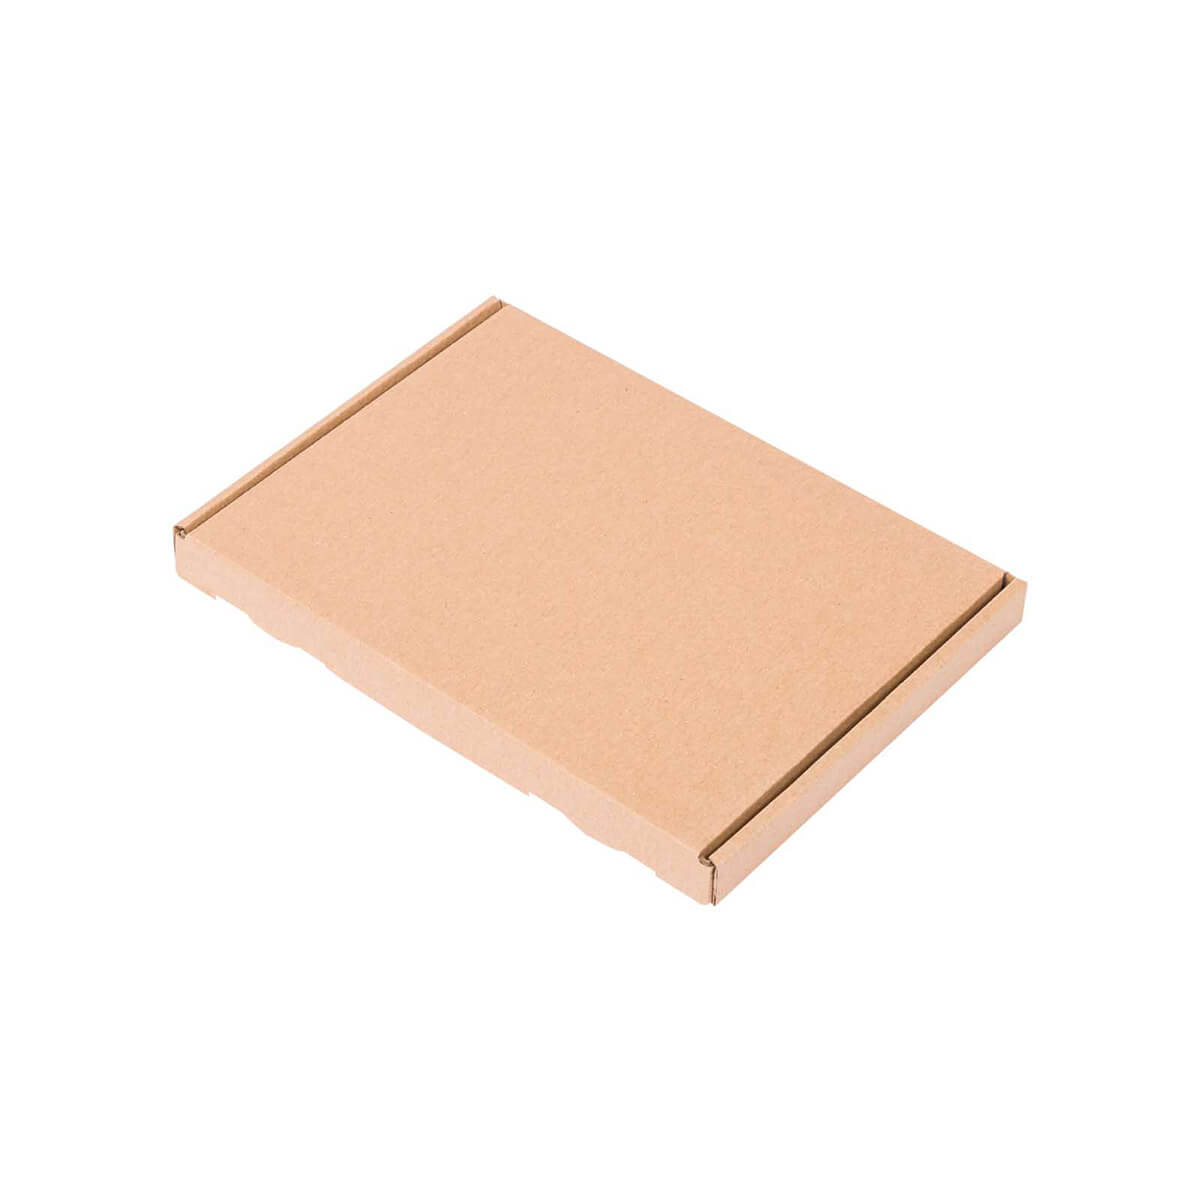 Big letter-sized carton 230x160x20 mm - GB 1, brown (DIN A5)